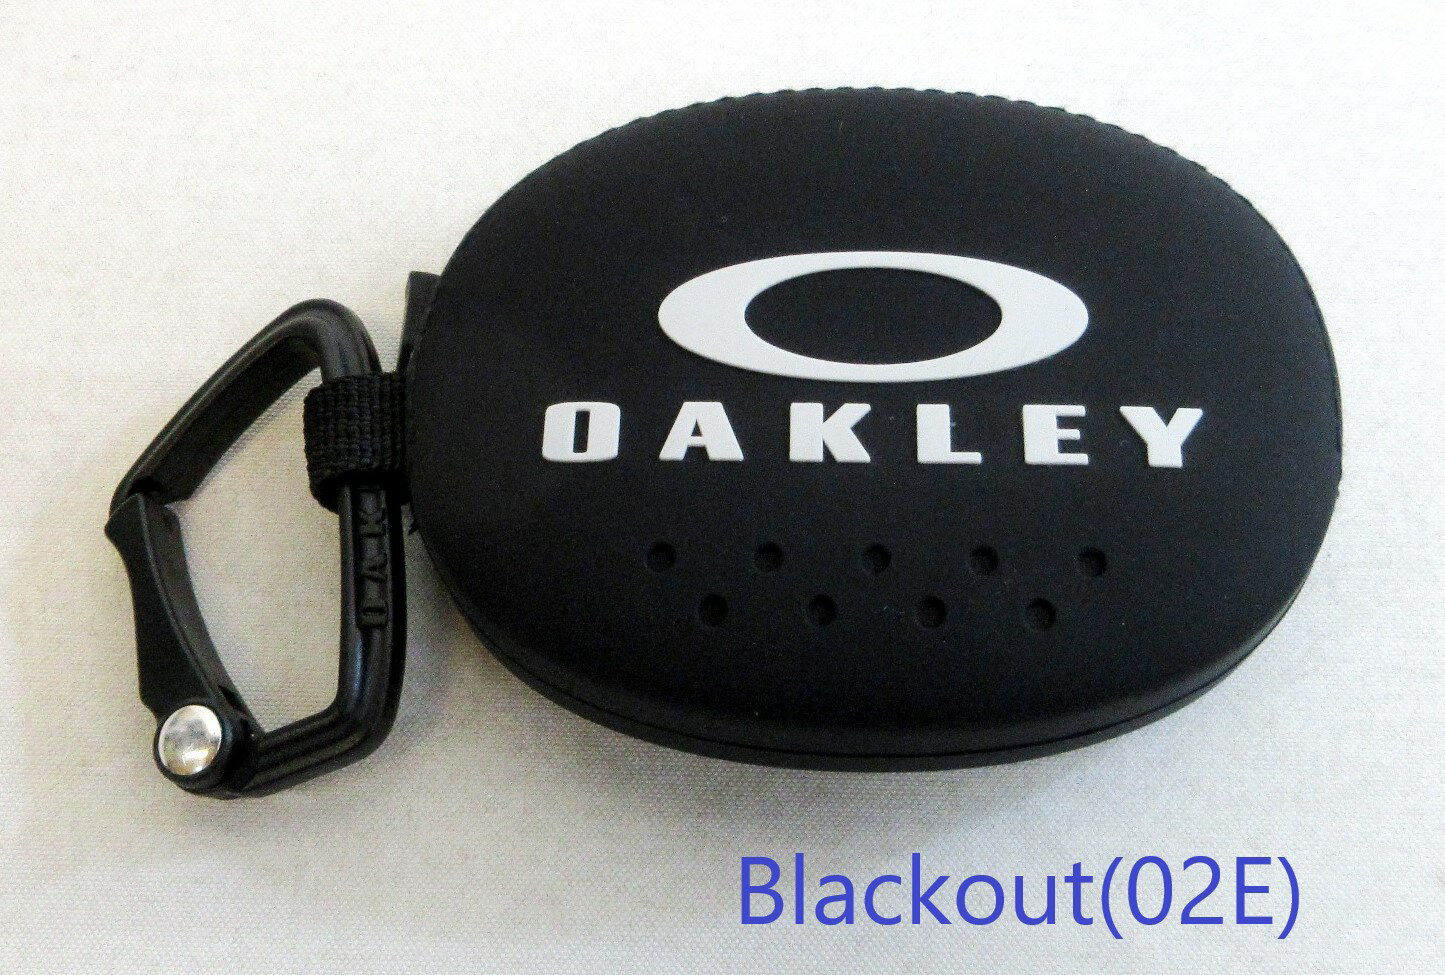 OAKLEY OAKLEY SILICONE CASE 17.0 FWFOS901540